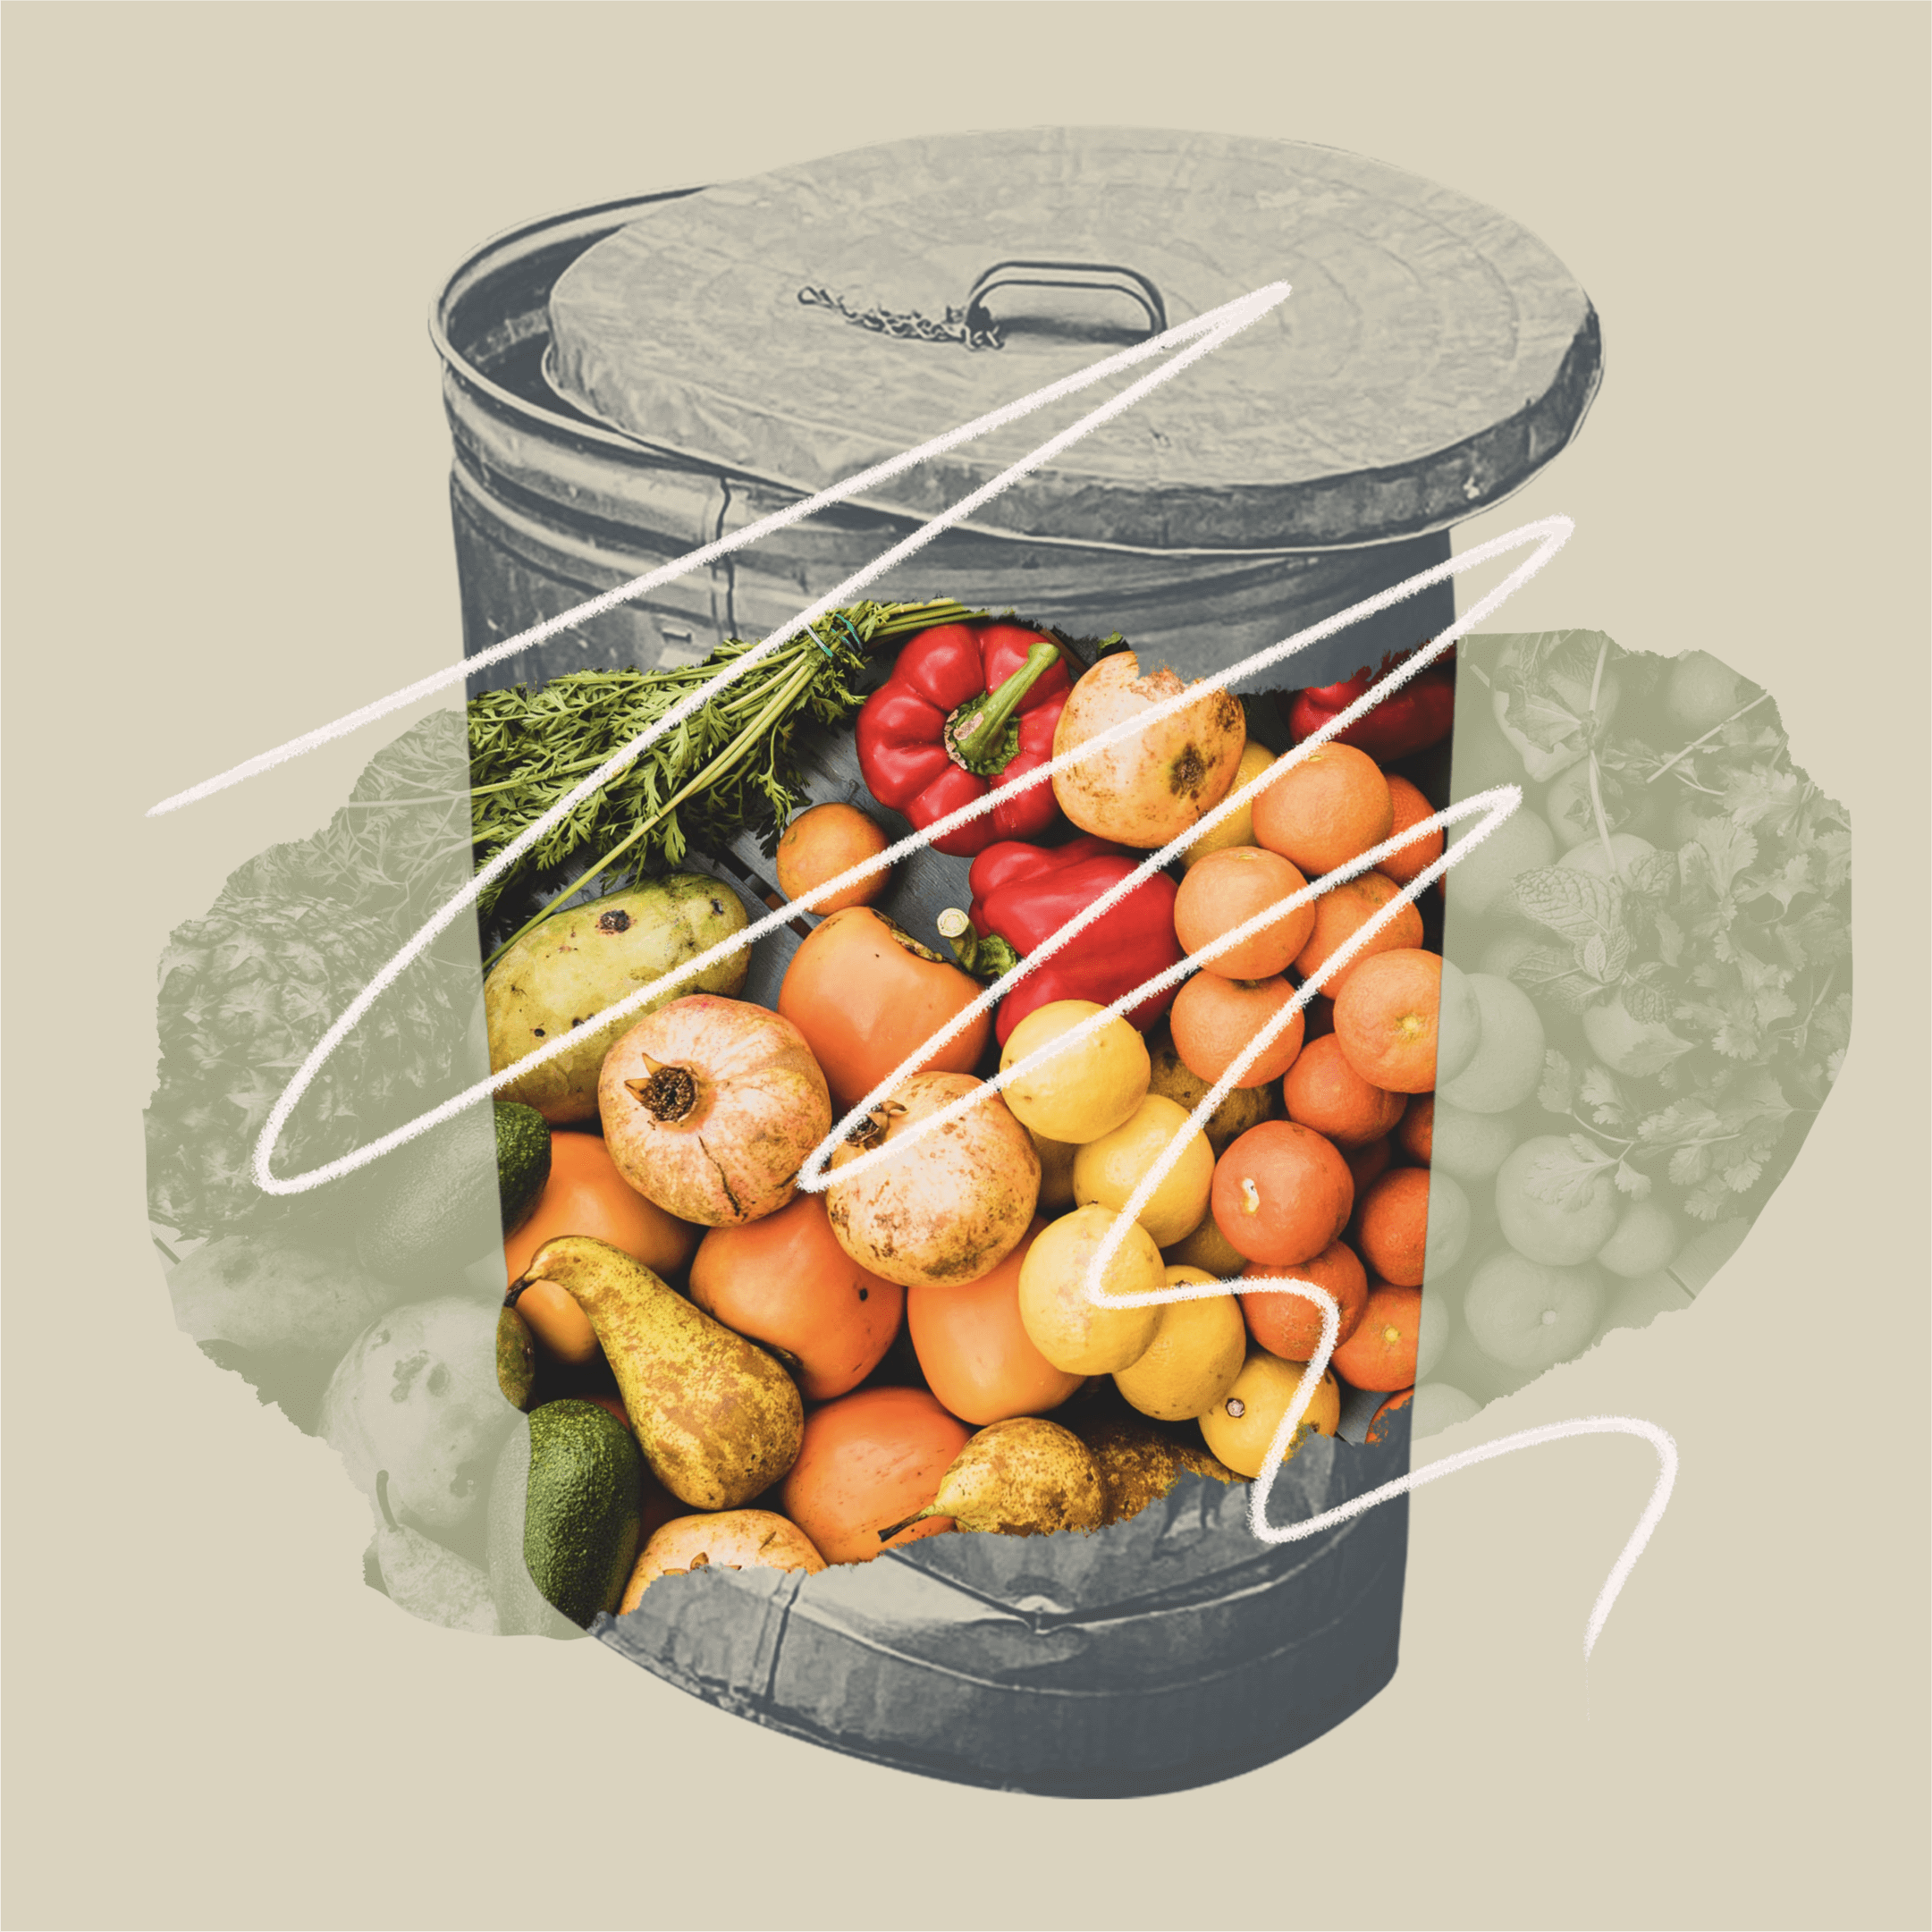 Get to work on reducing food waste